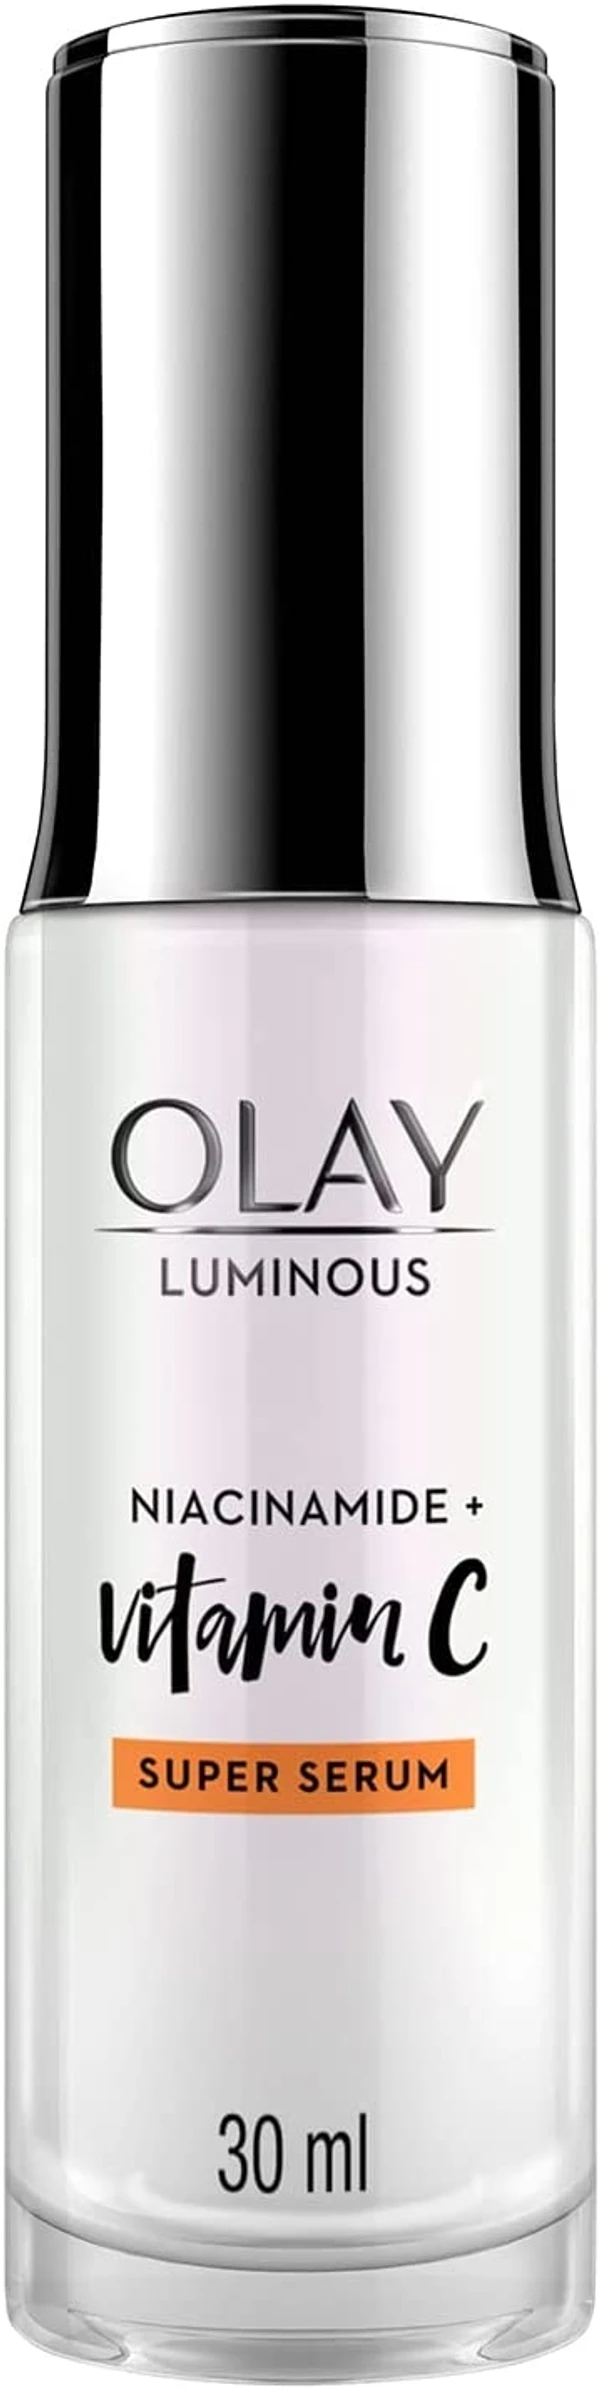 Olay Luminous Vitamin C Super Serum,30 ml 